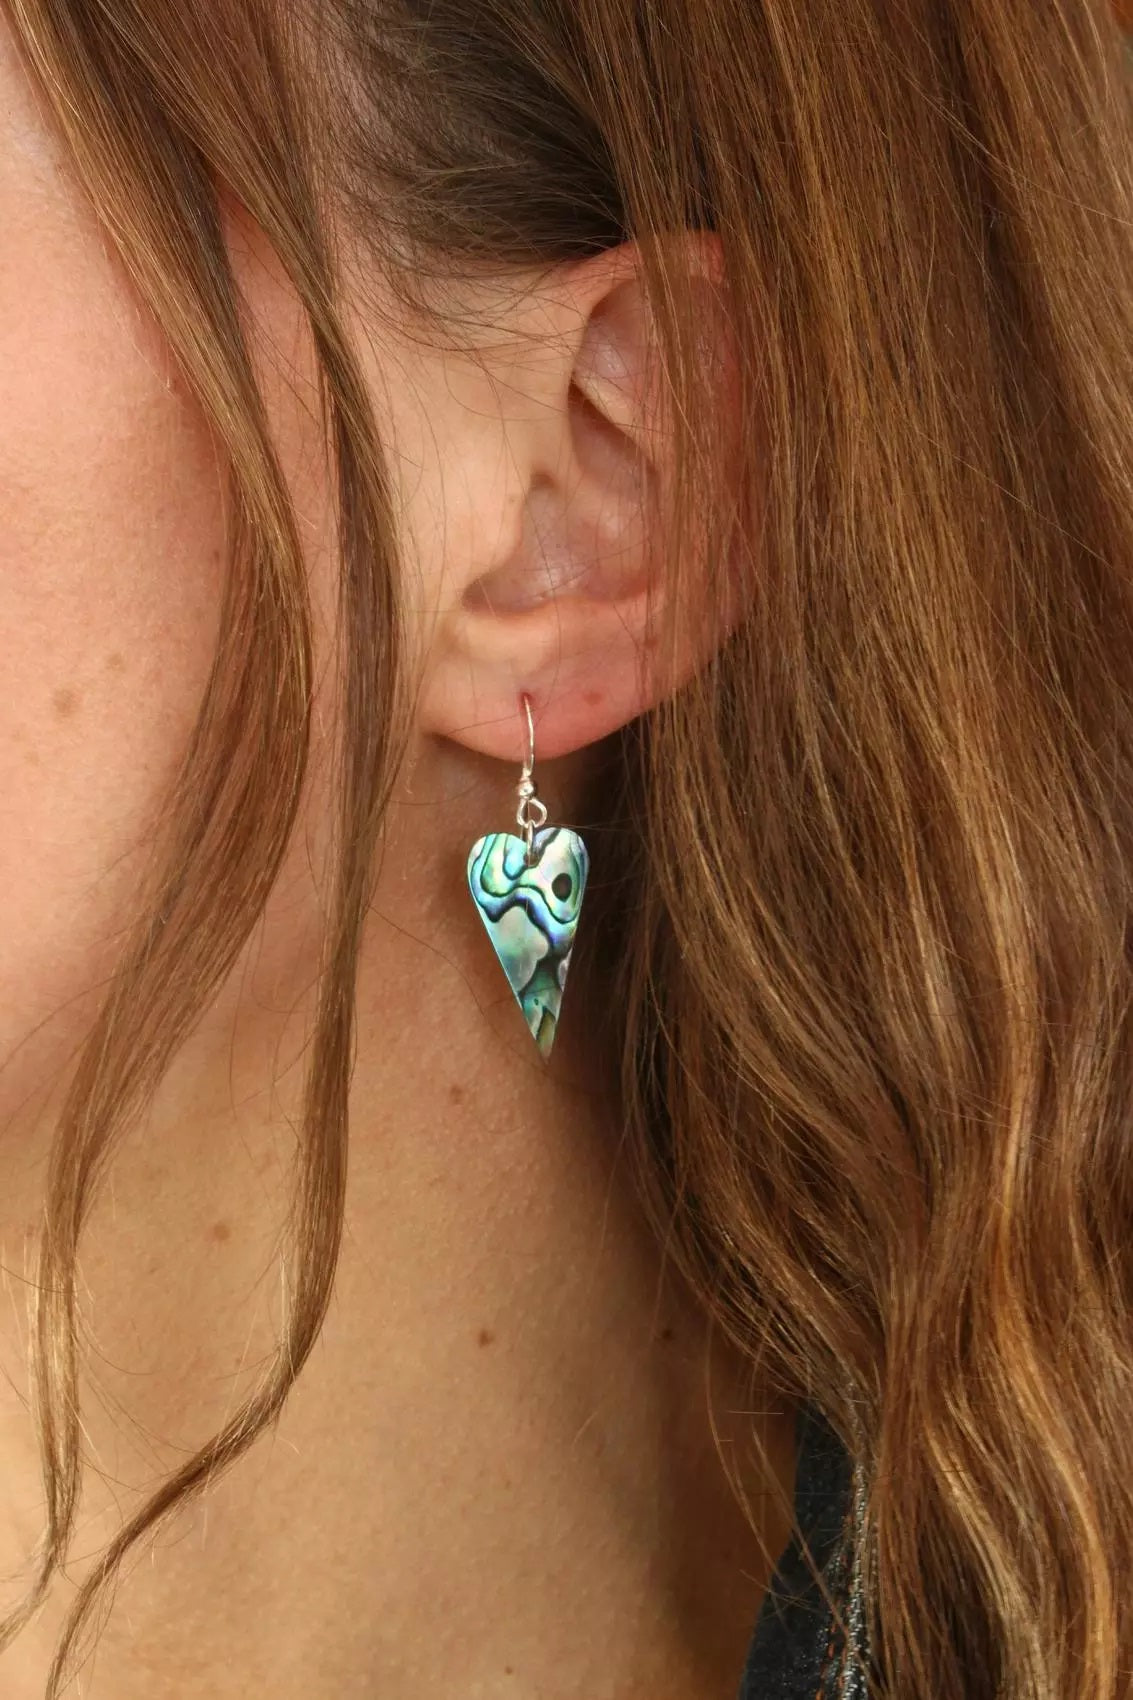 Pine Tree Earrings By Pam Gardas | Boundary Waters Catalog